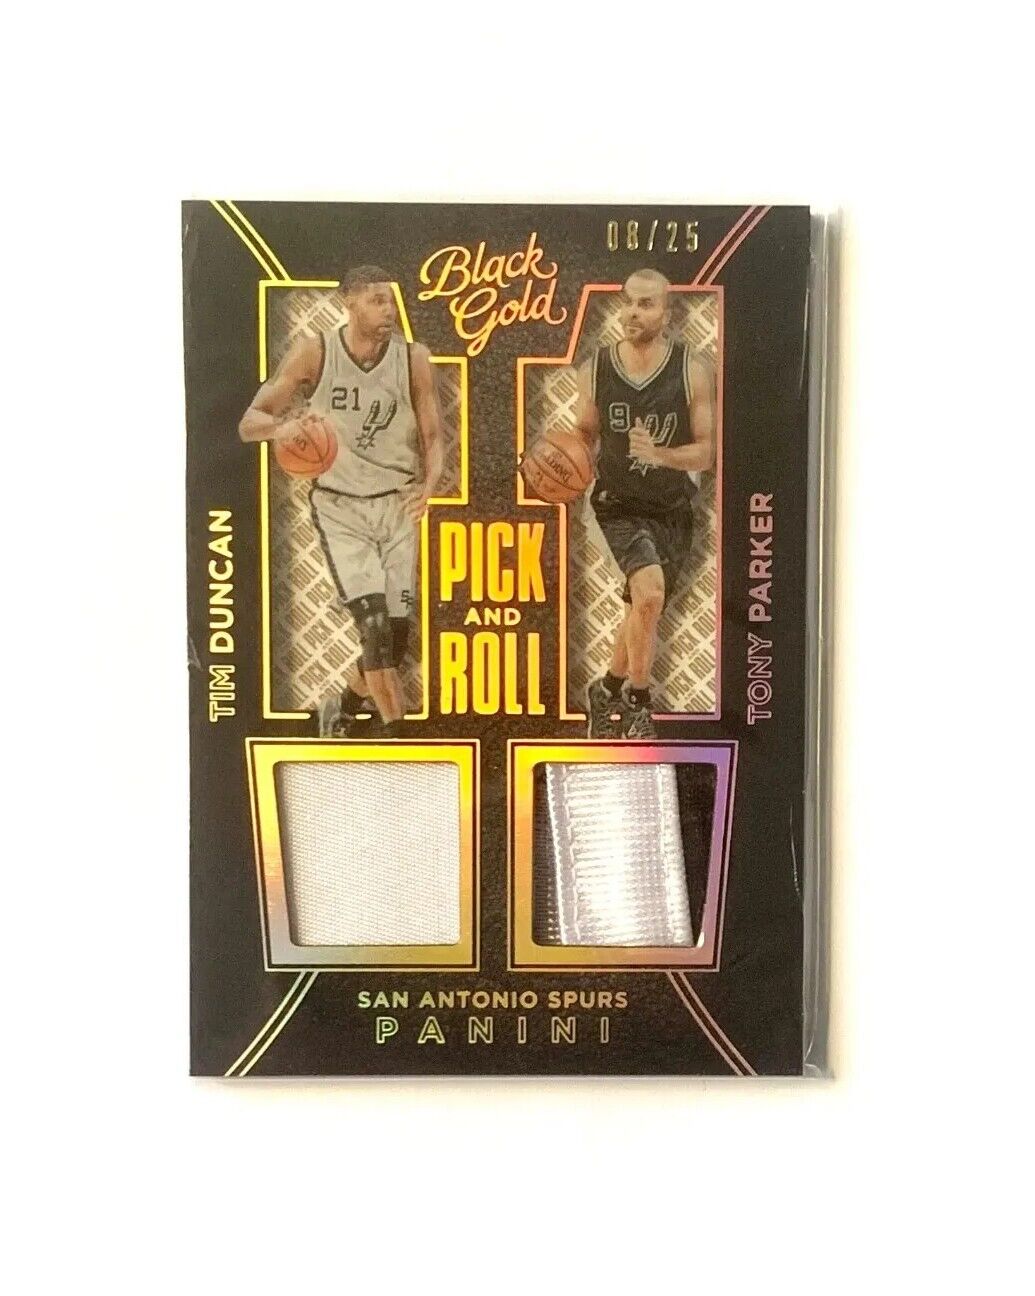 /25 DUNCAN PARKER 2015-16 Panini BLACK GOLD Pick Roll NBA Basketball Jersey SPURS